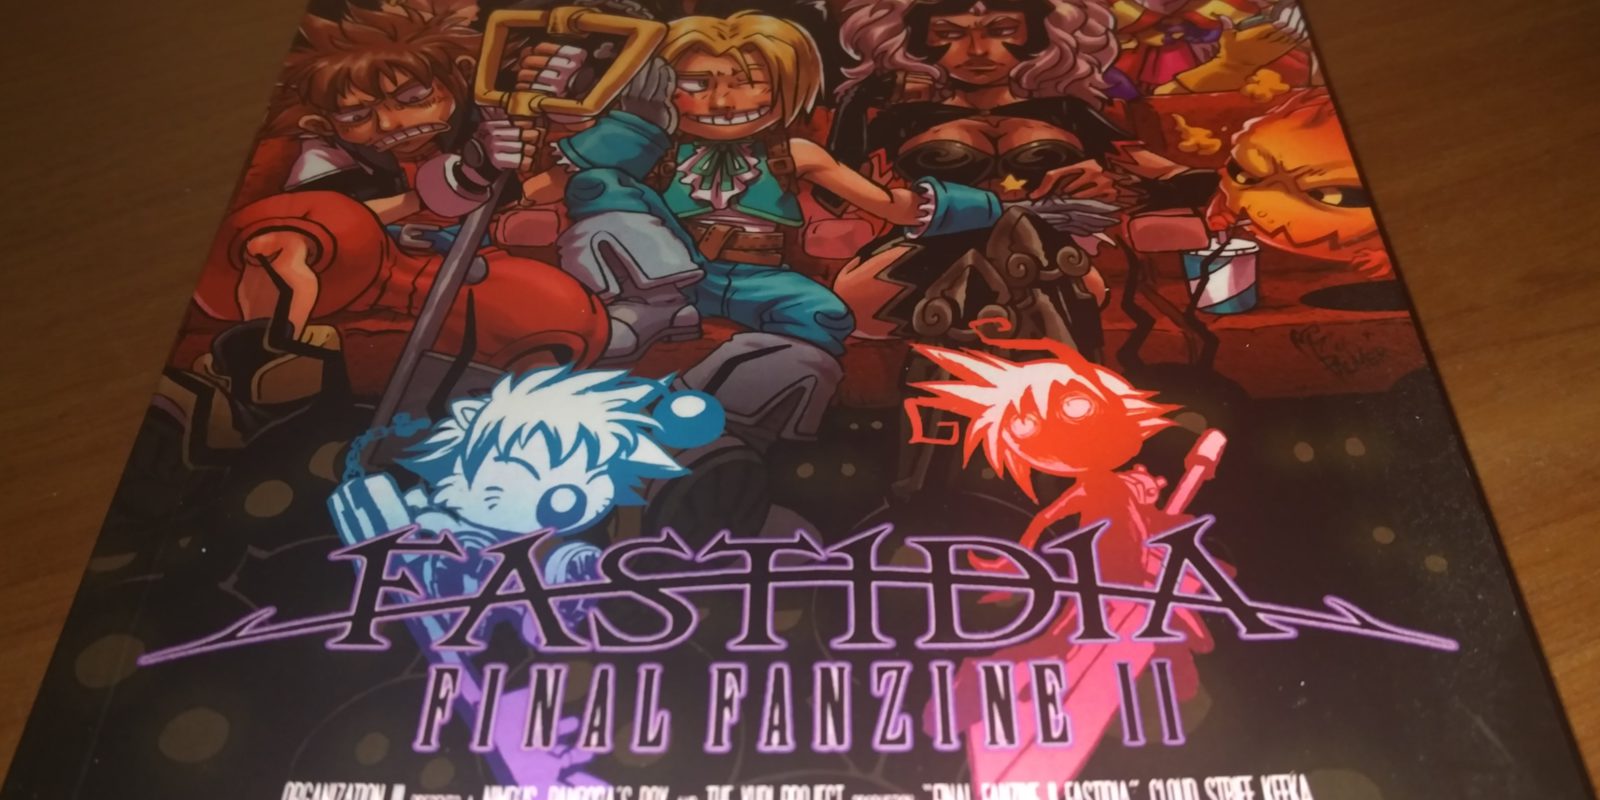 Fastidia Final Fanzine II